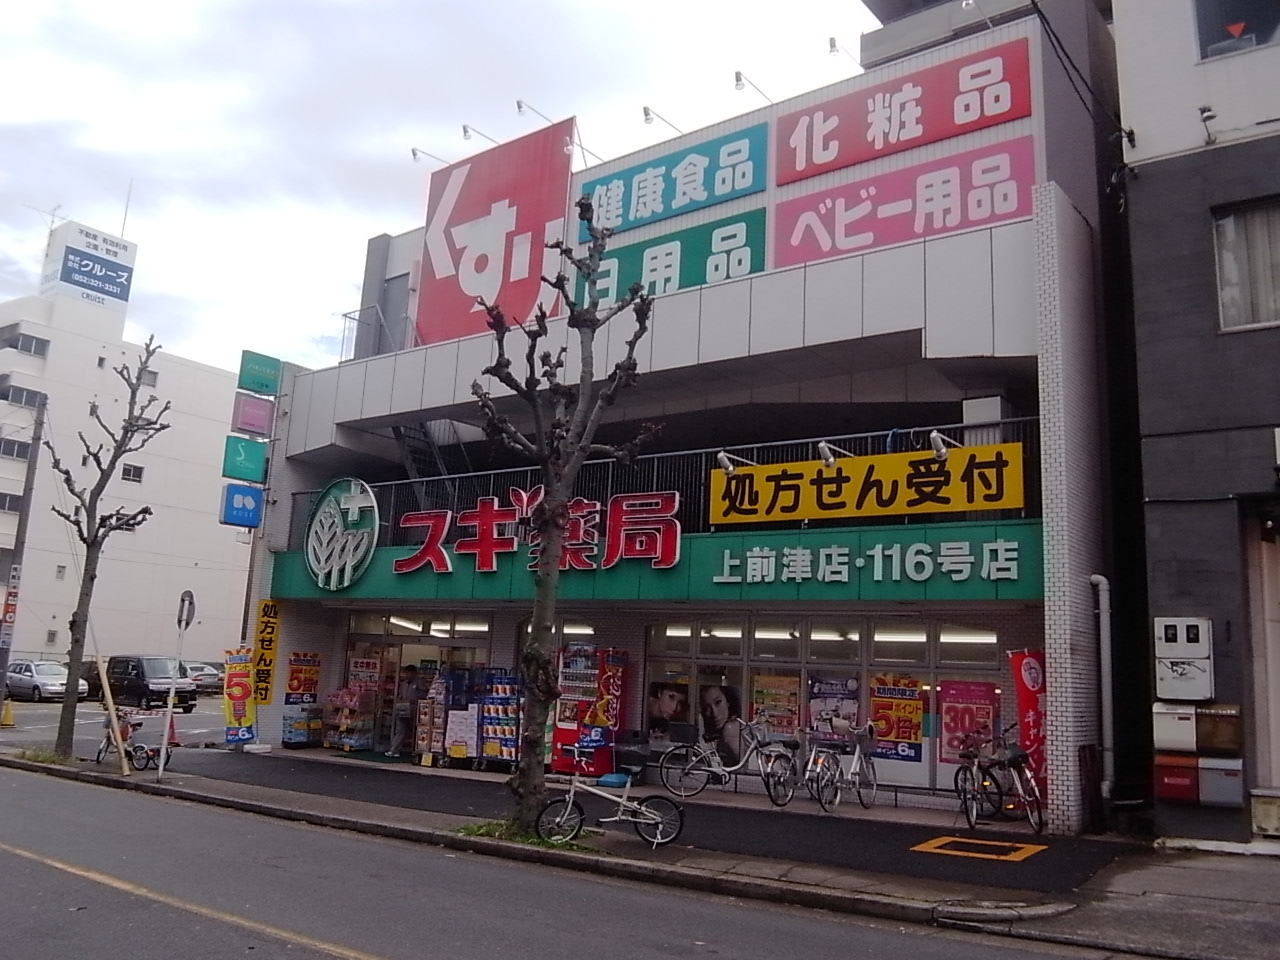 Dorakkusutoa. Cedar pharmacy Kamimaezu shop 390m until (drugstore)